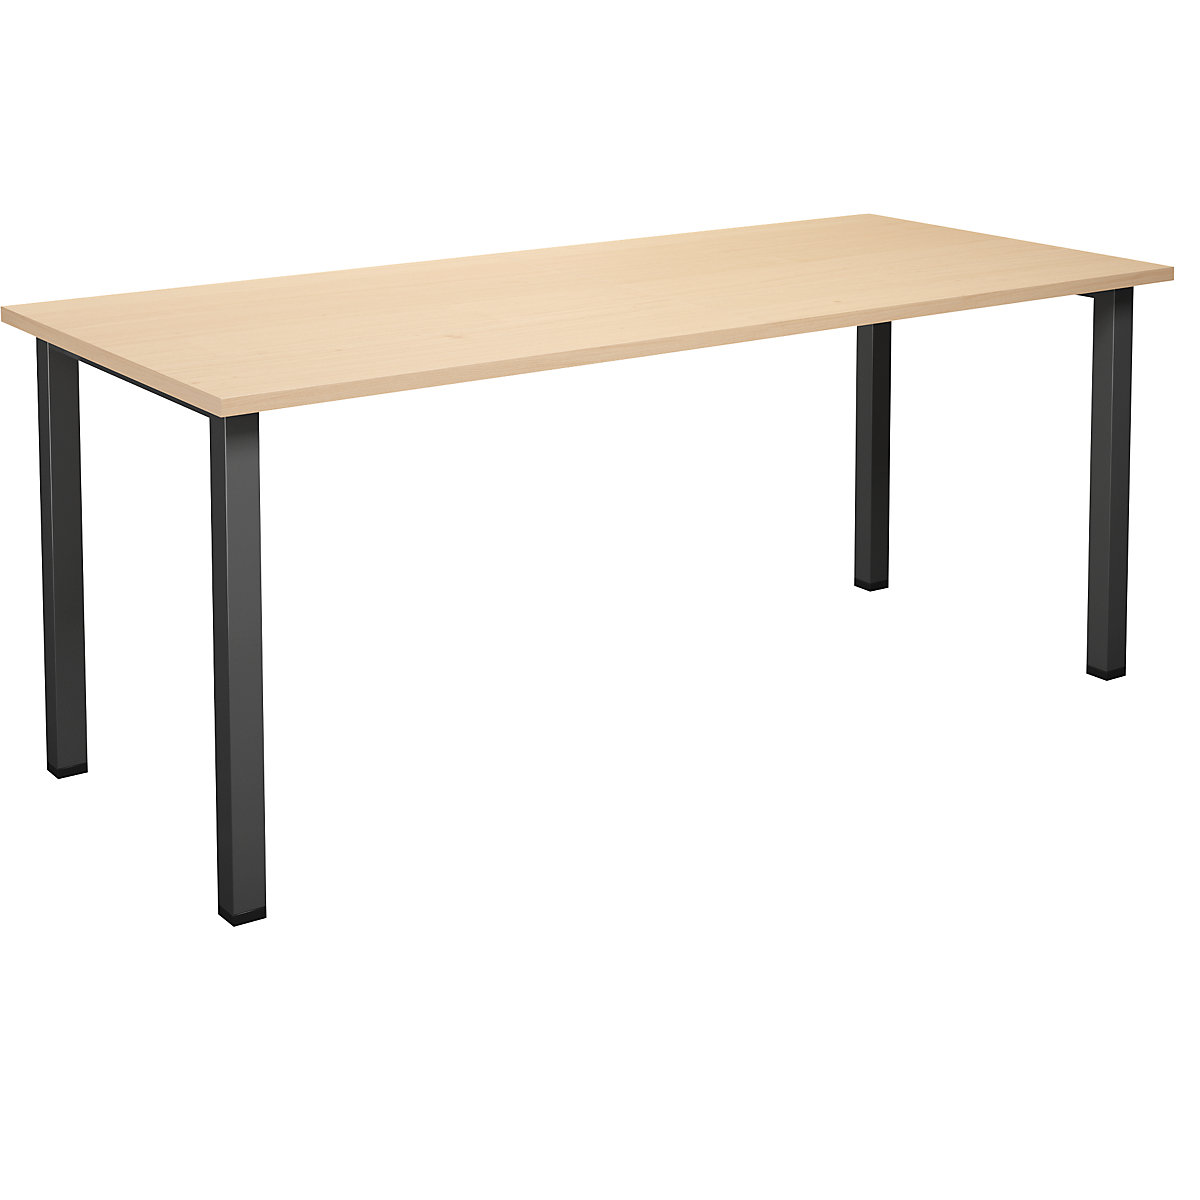 DUO-U multi-purpose desk, straight tabletop